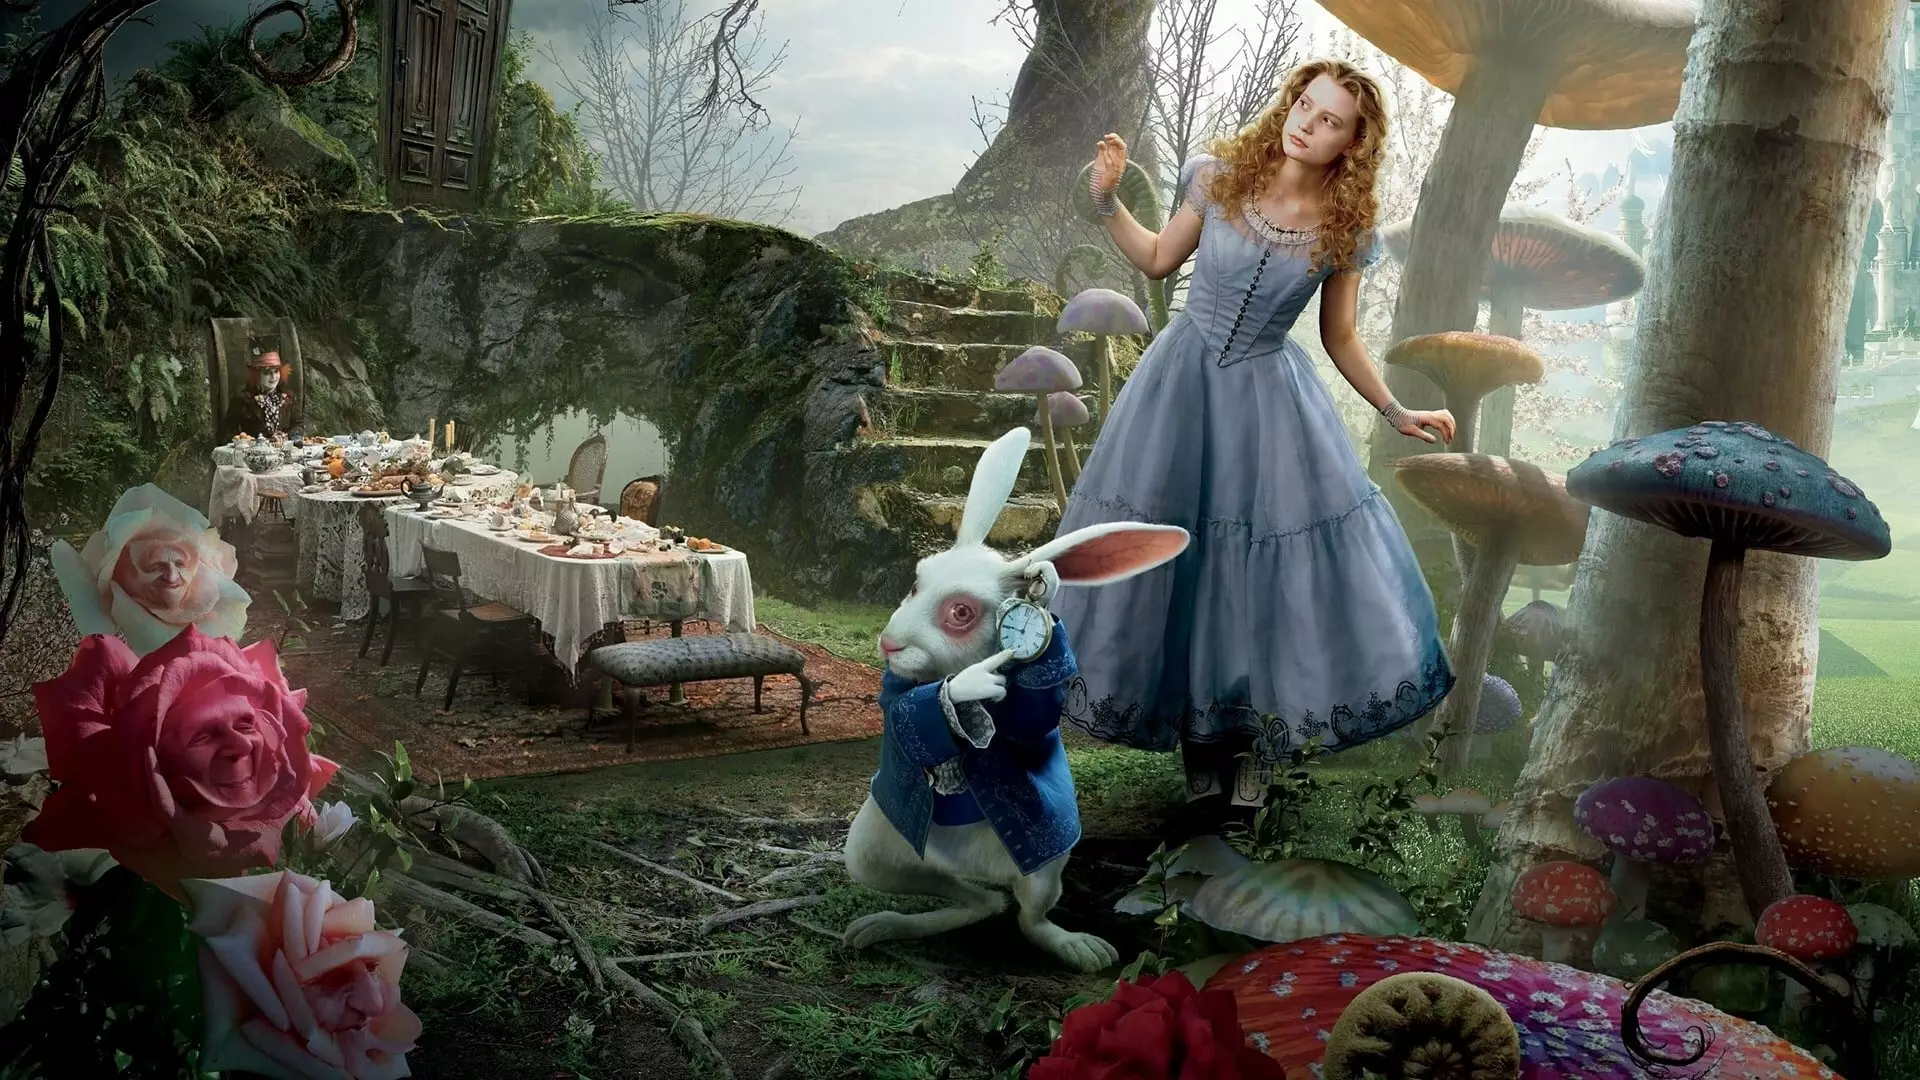 Кадр из фильма "Алиса в стране чудес"